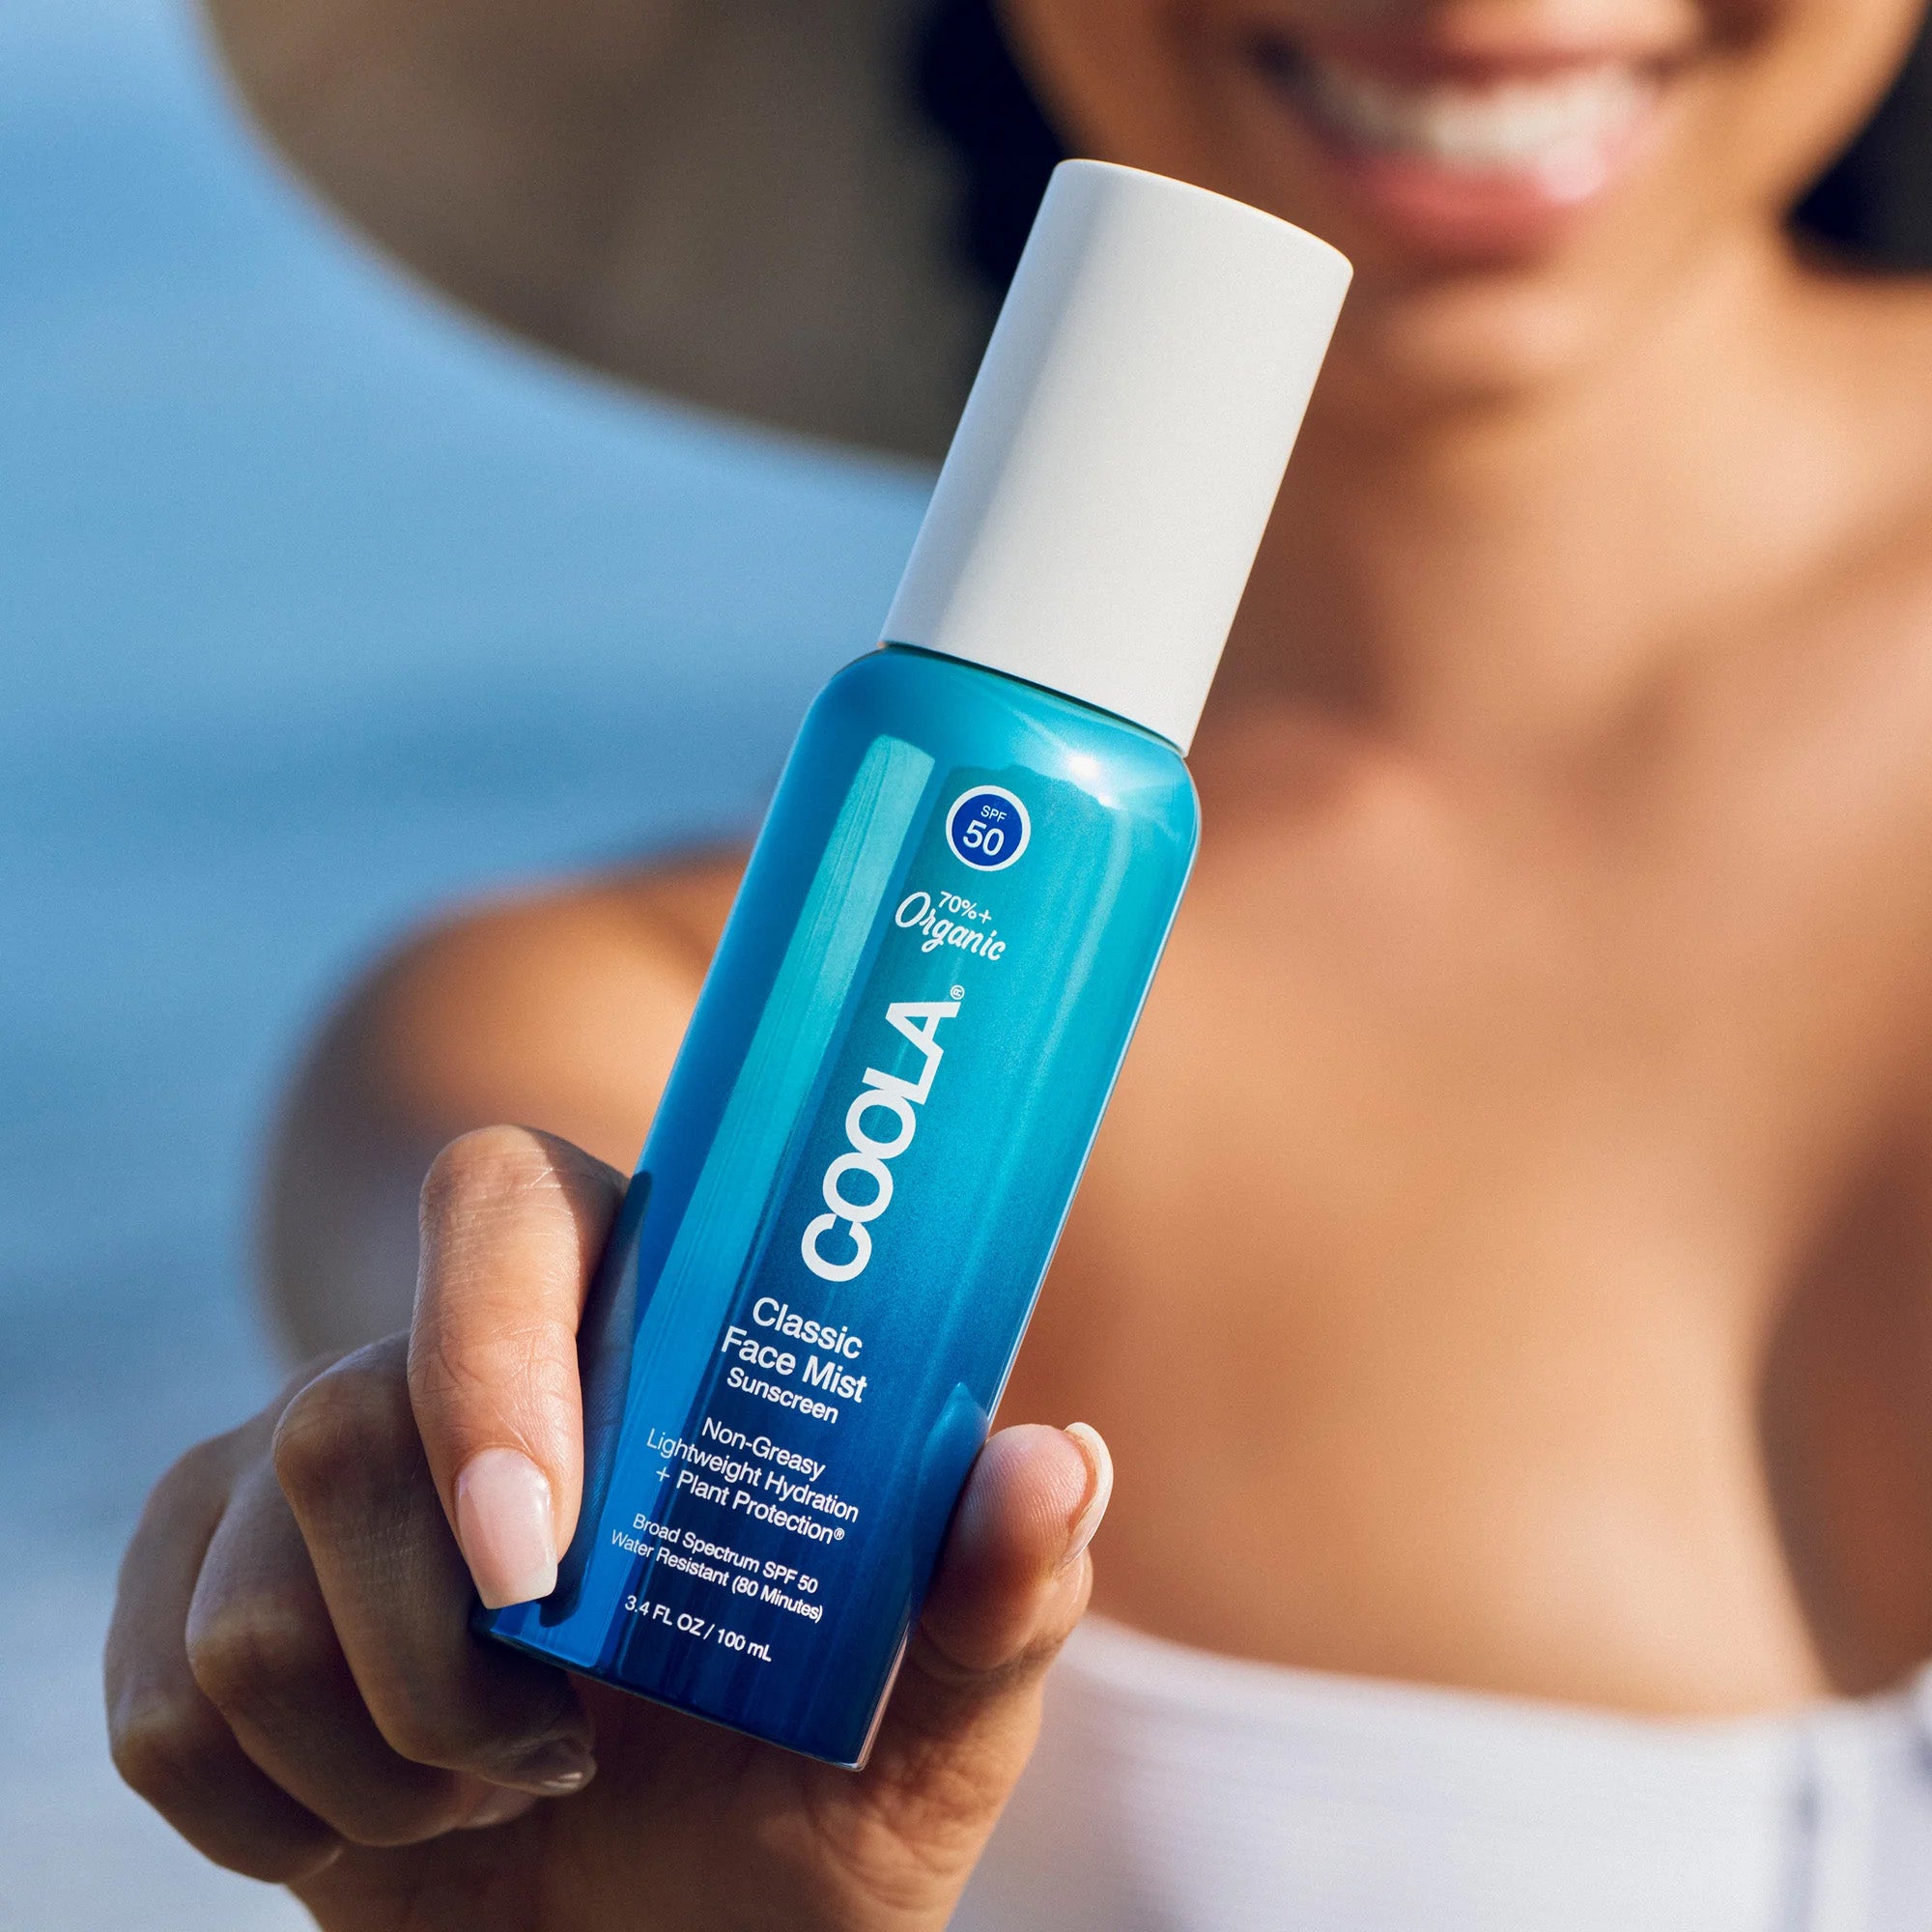 Coola Classic Face Sunscreen Mist SPF 50 / 3.4OZ